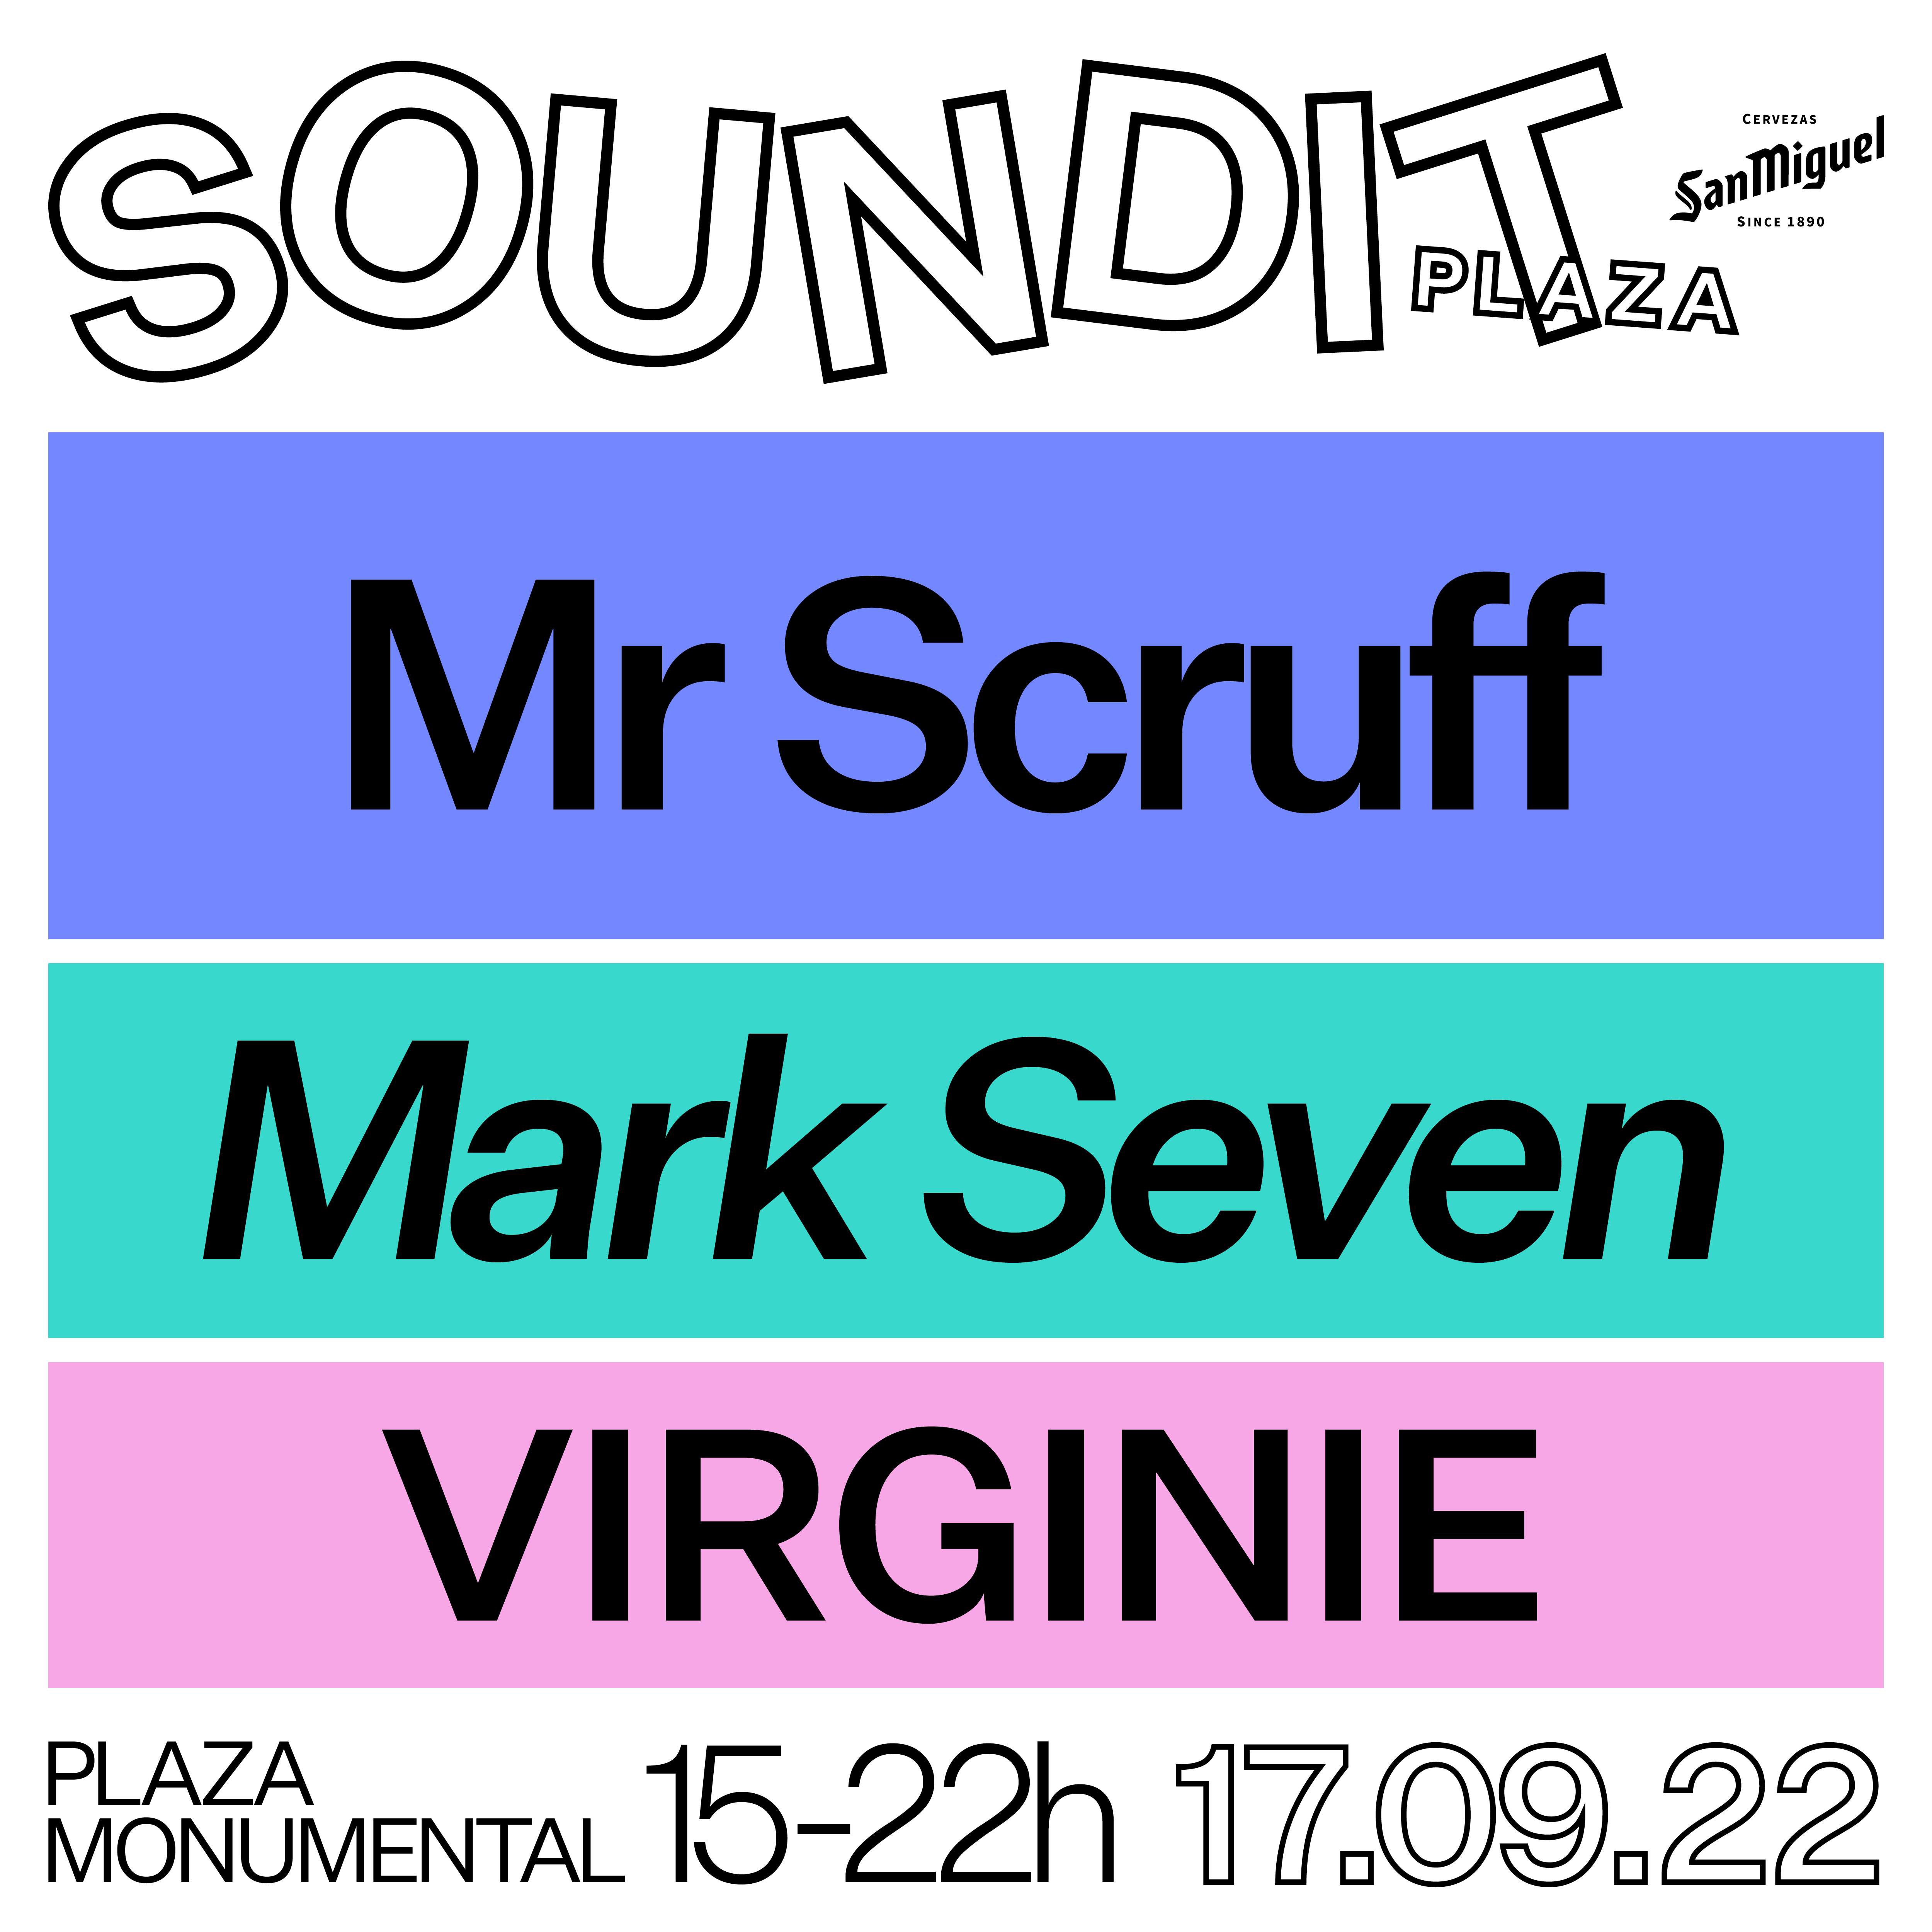 SOUNDIT Plaza: Mr Scruff, Mark Seven, Virginie - Página trasera